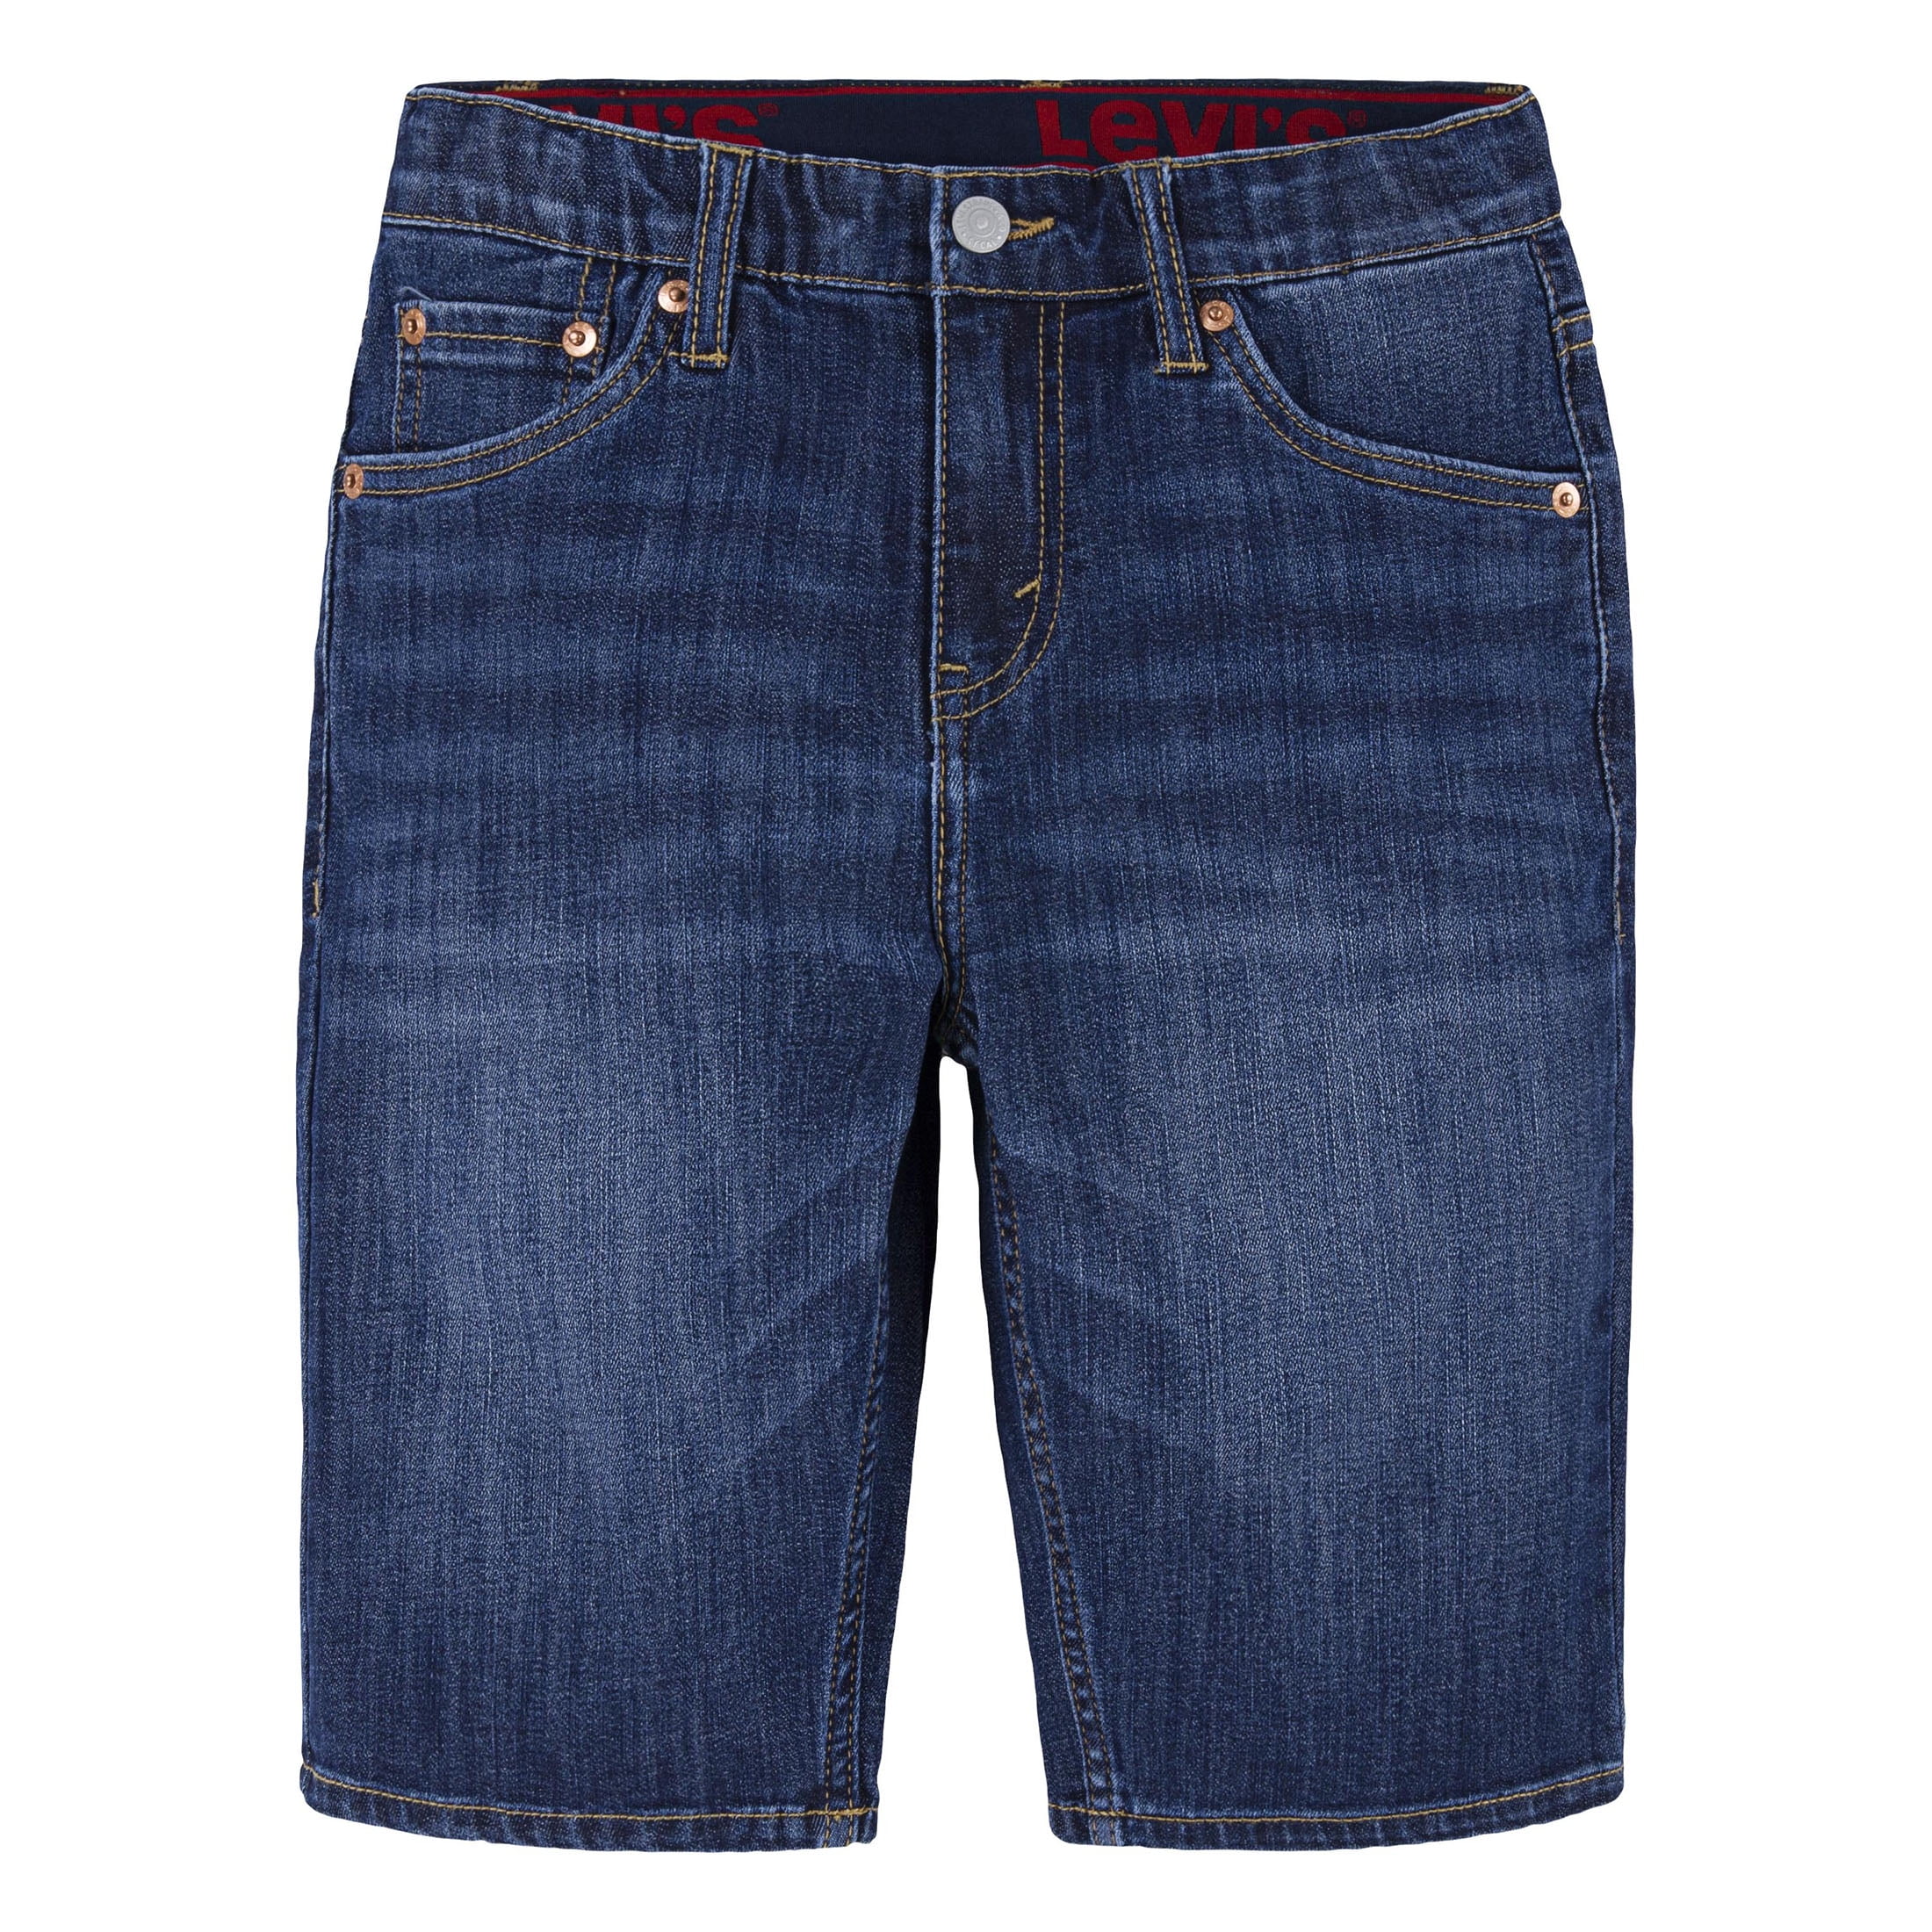 New Levi's 511 Slim Shorts Distressed Denim Blue Jean Shorts Men Size 30 x  10.25